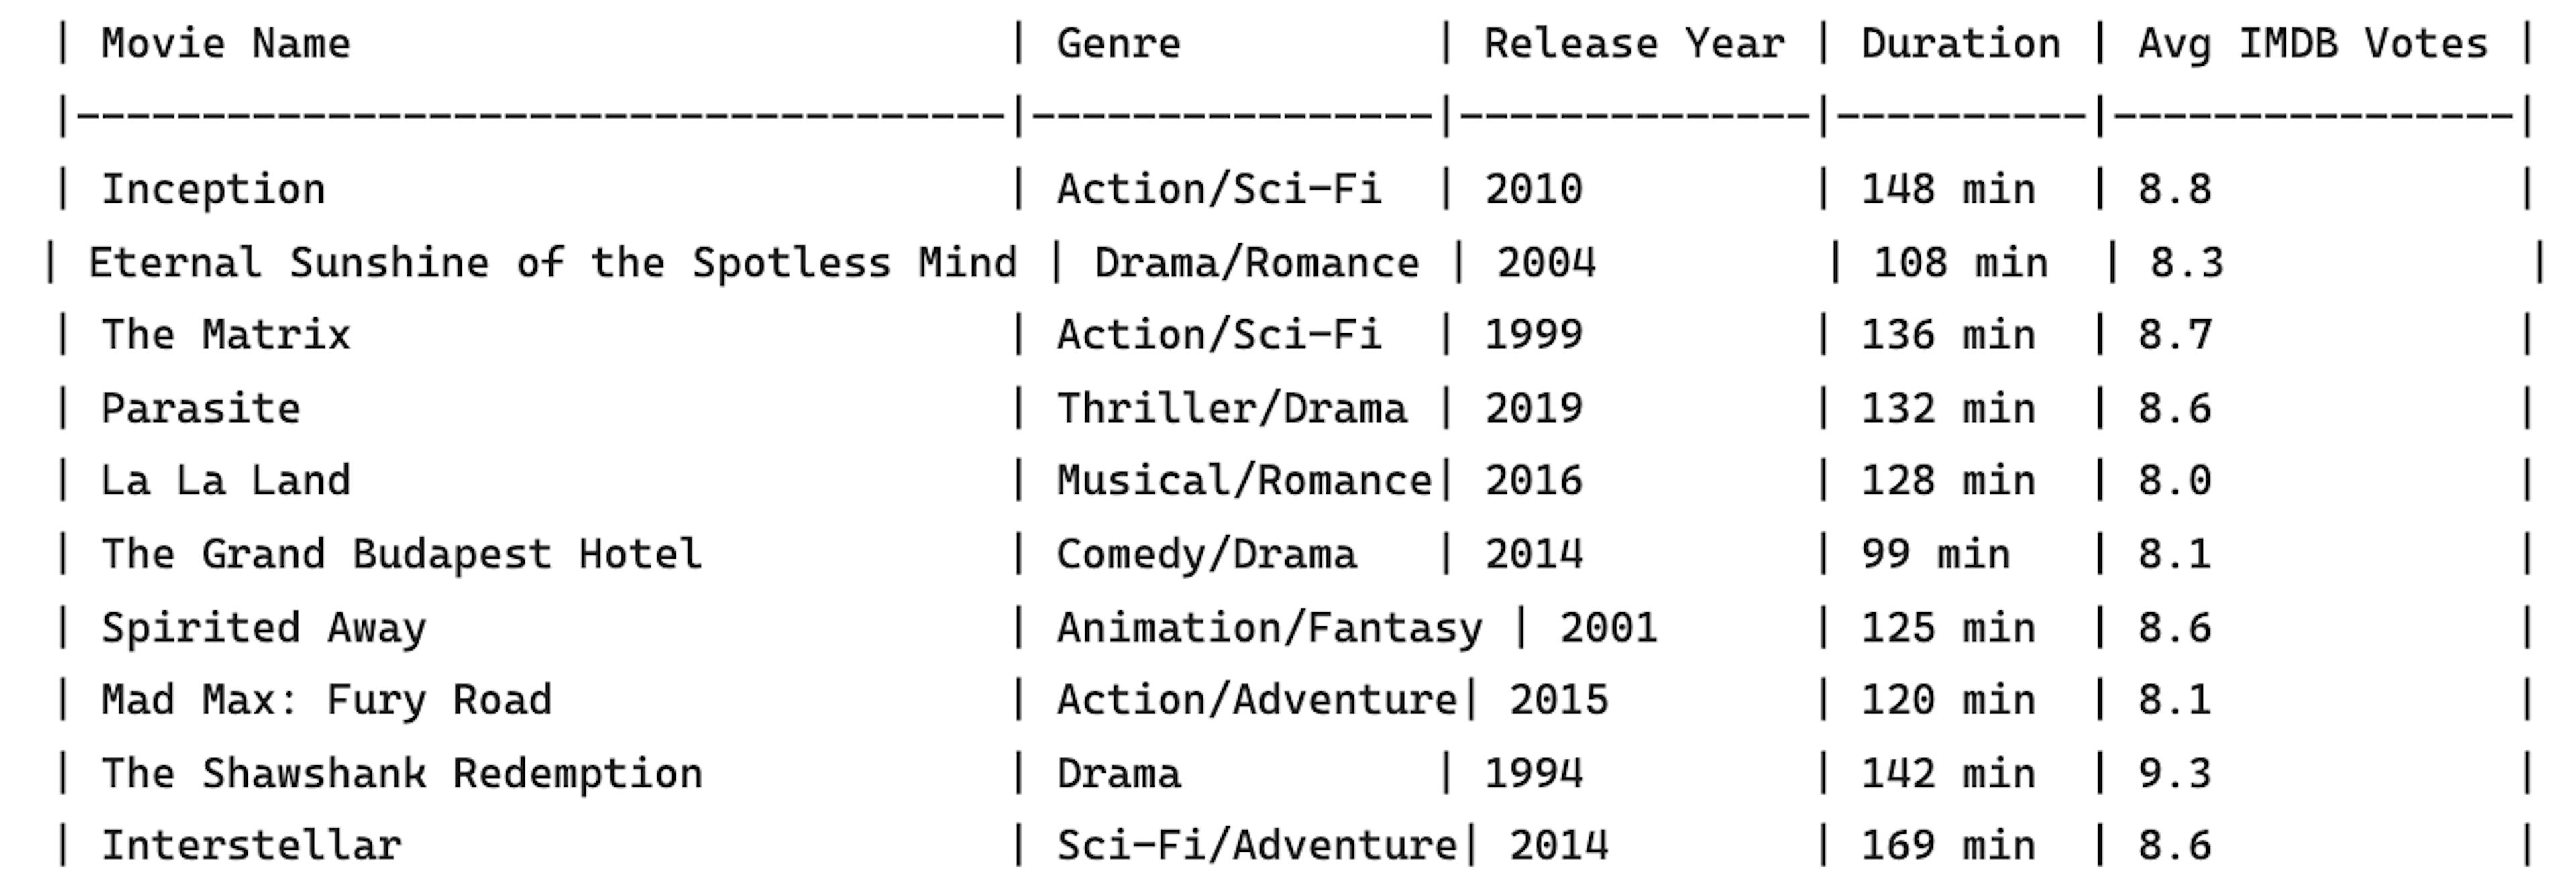 IMDB Sample Data